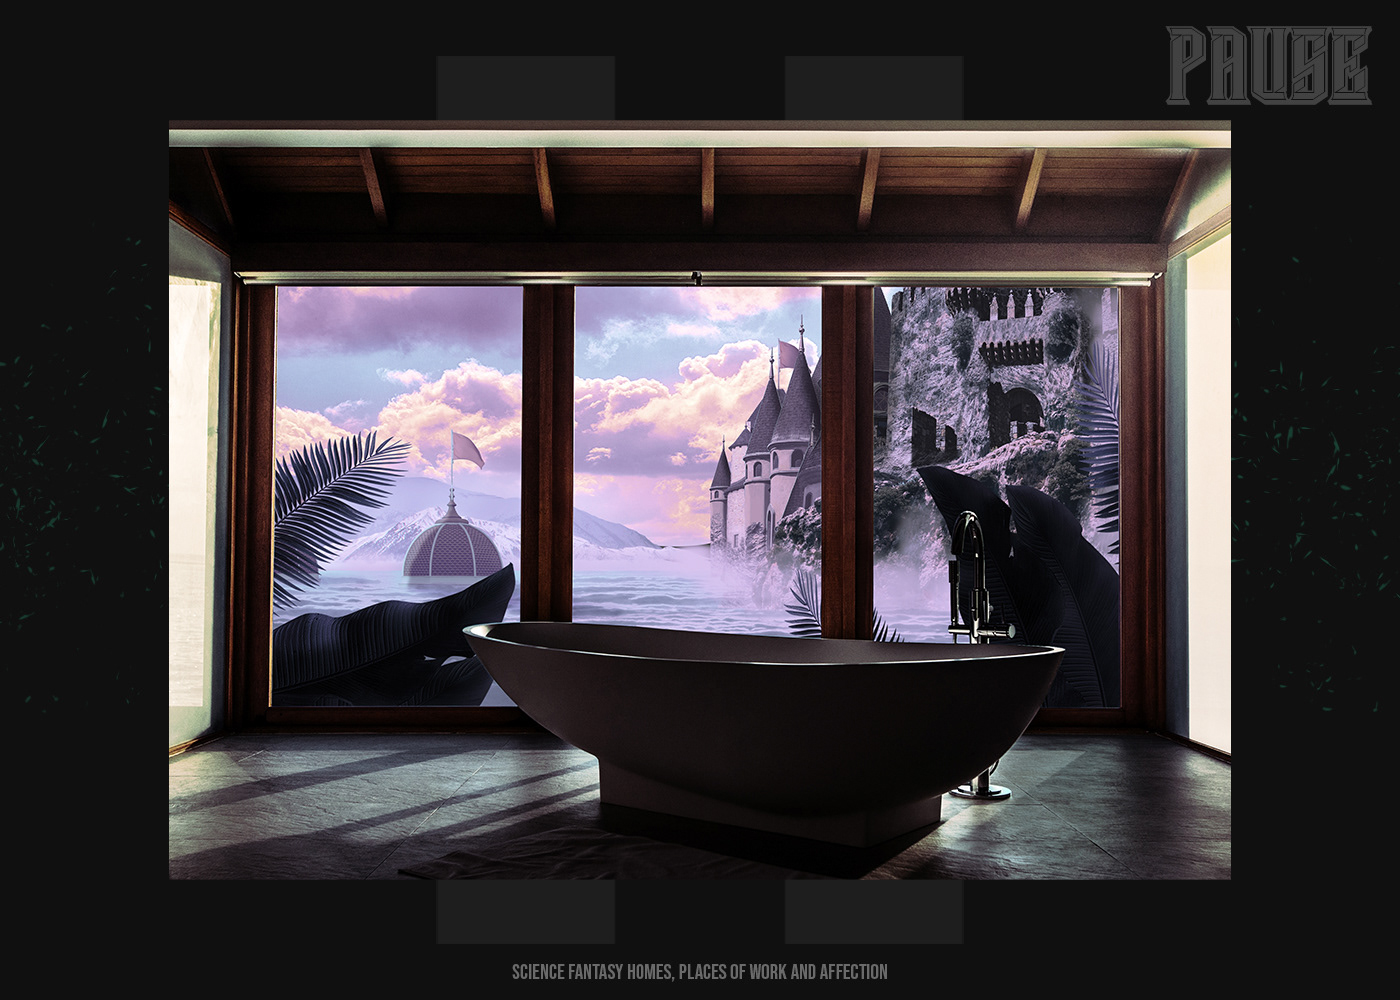 Interior science fiction Window dreamscape Digital Art  Photo Manipulation  fantasy art Dystopia scenery Landscape